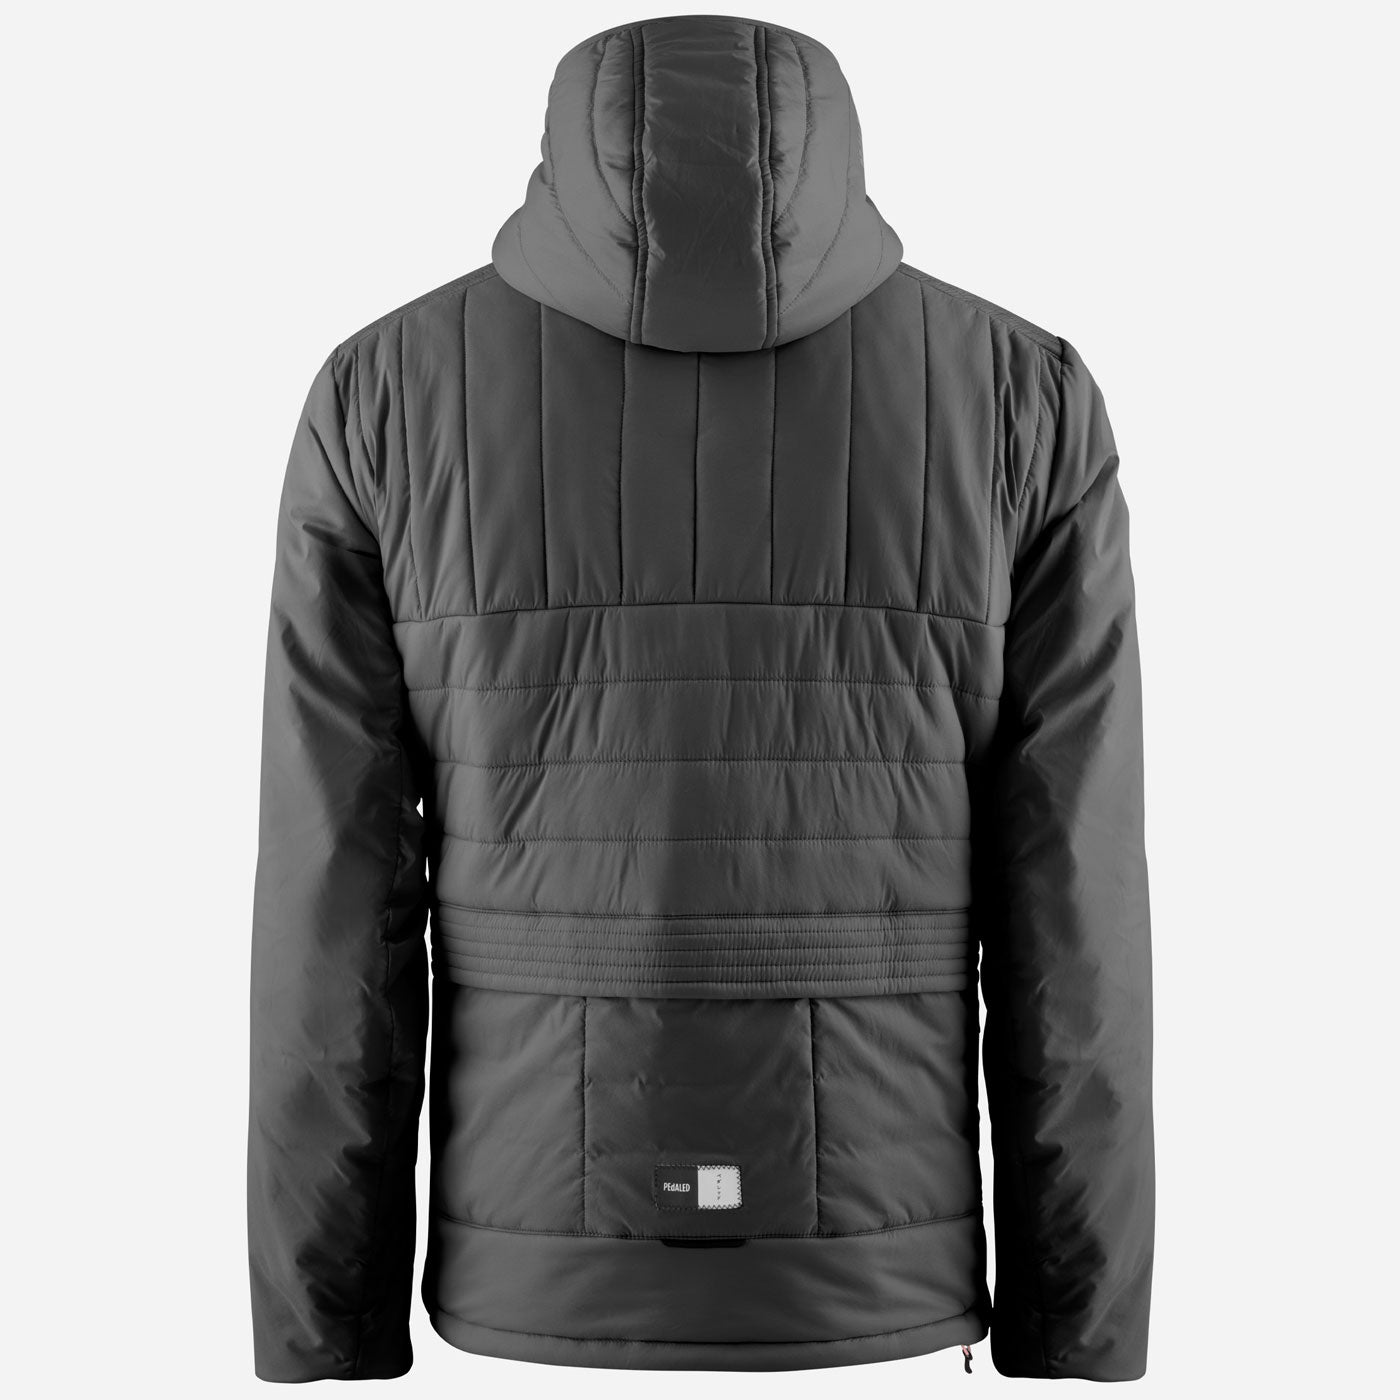 Pedaled Odyssey jacket - Black